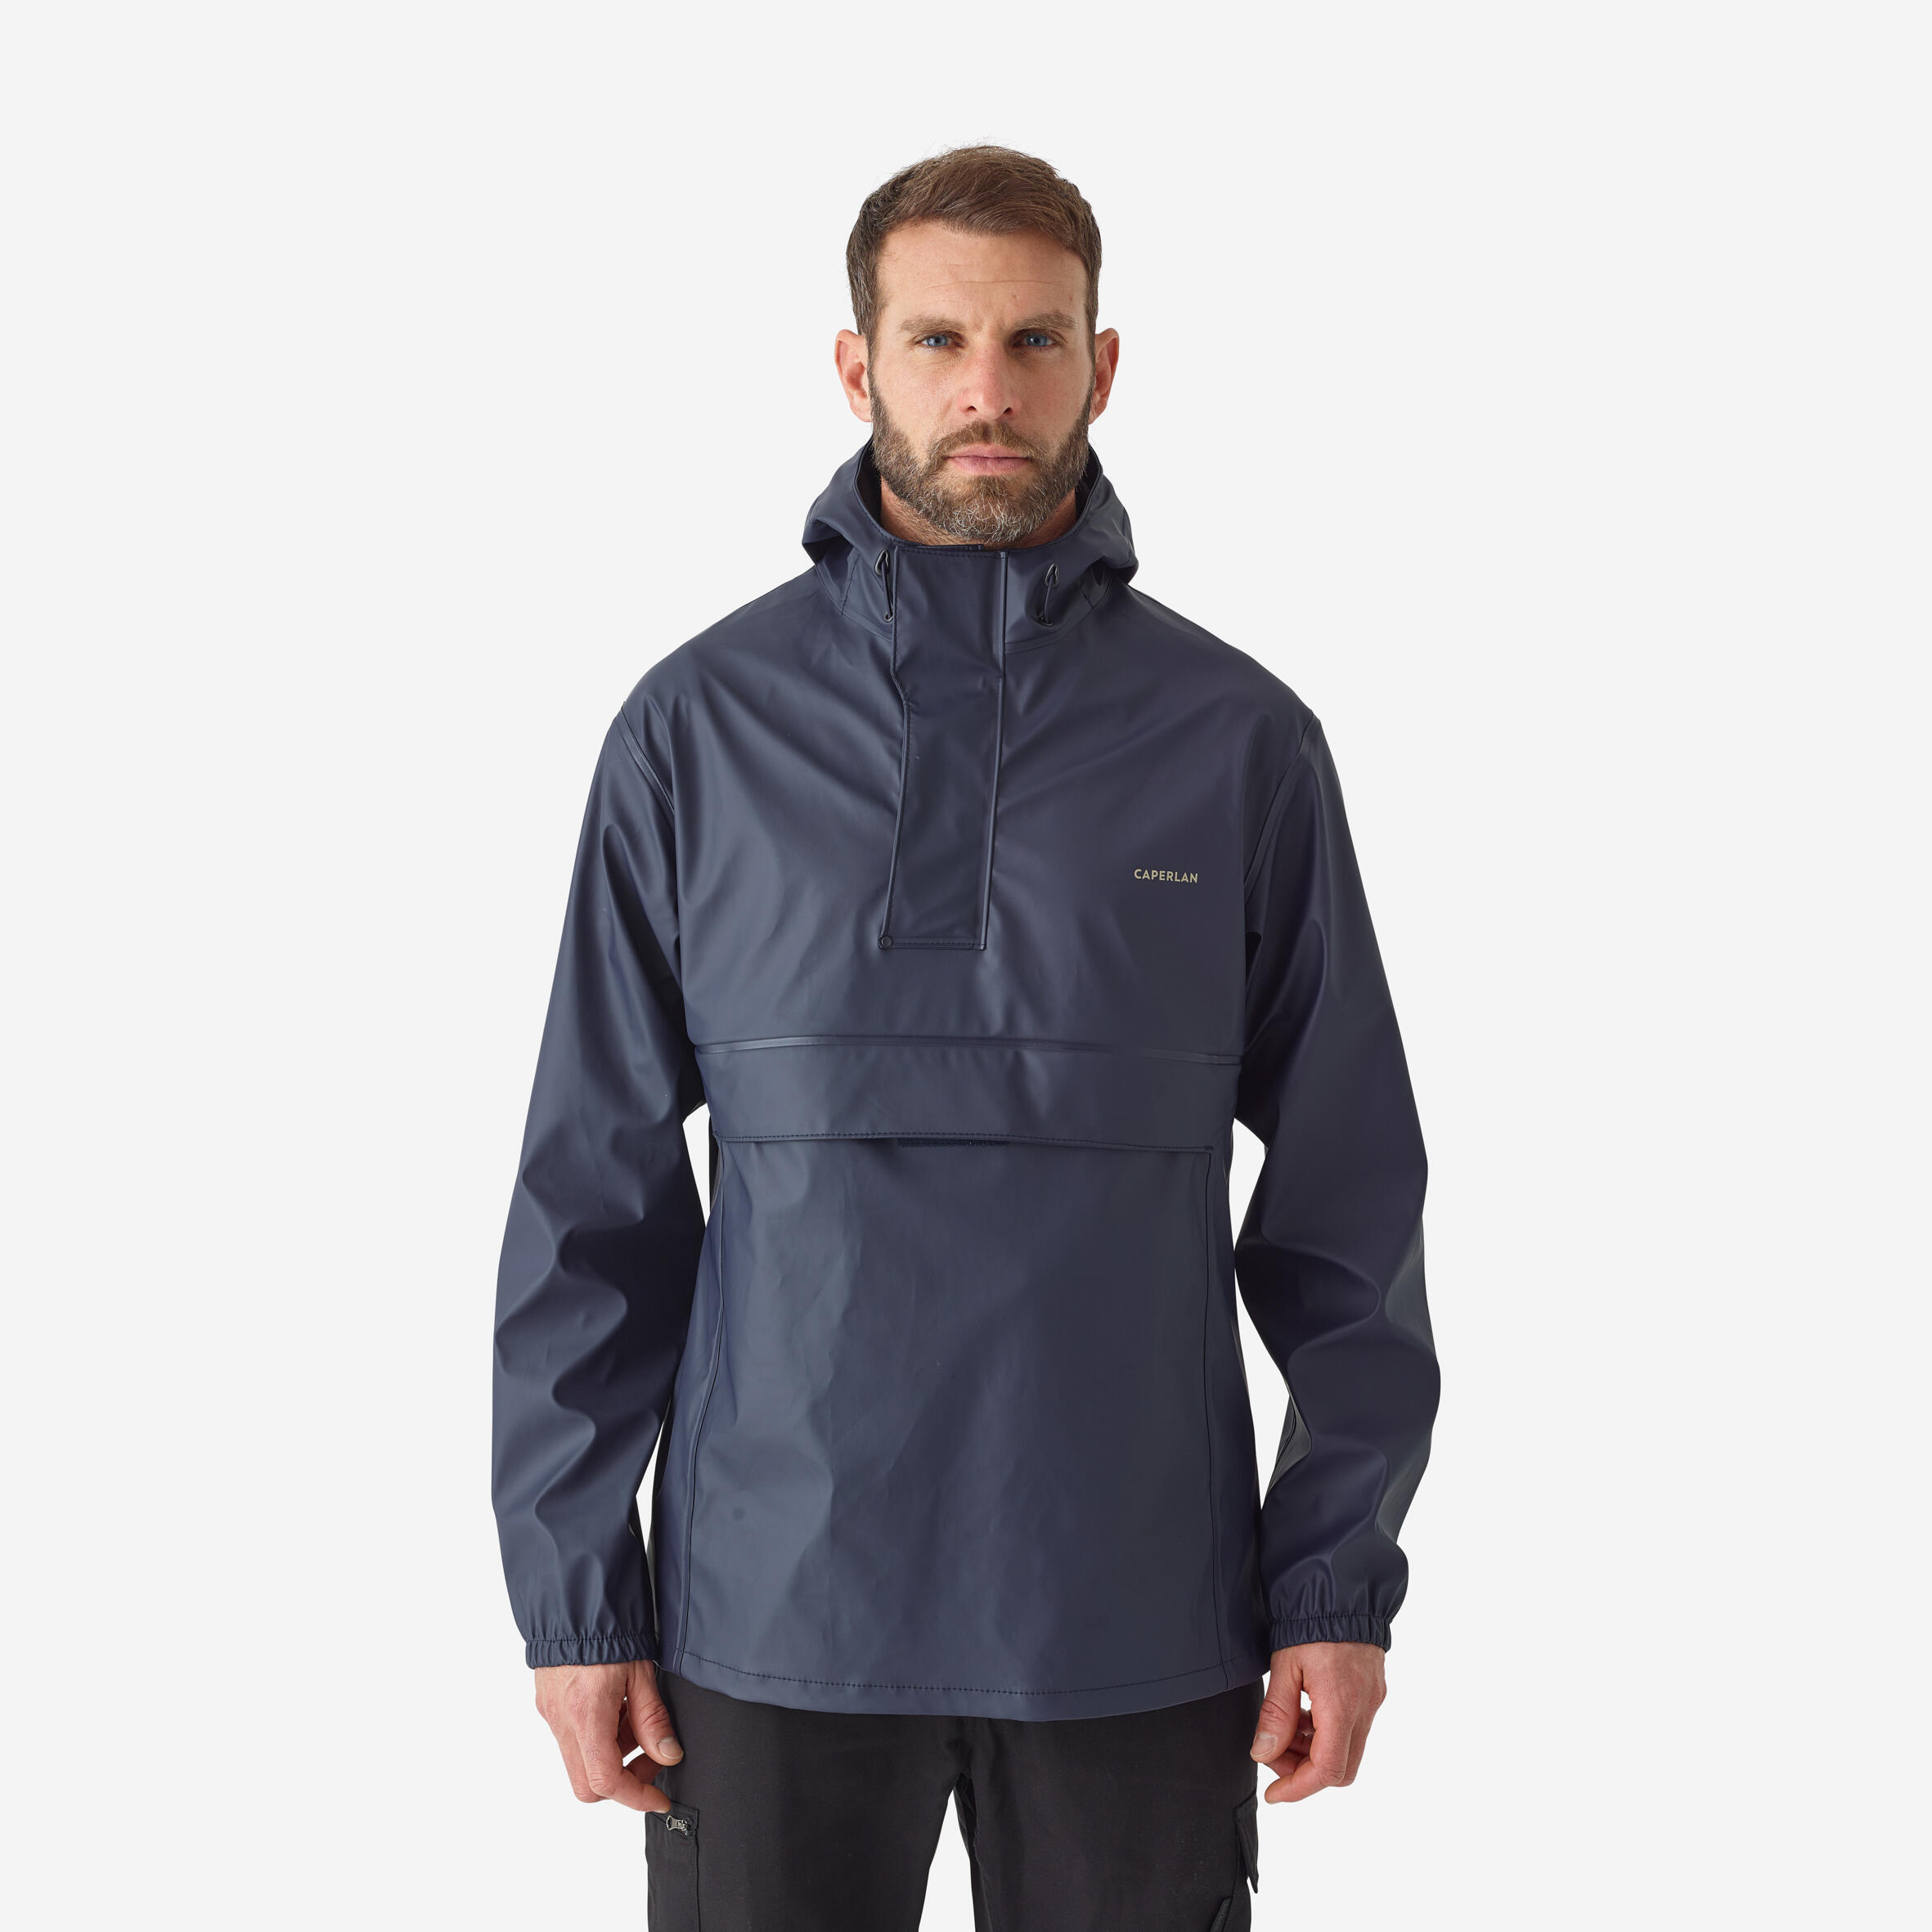 Fishing waterproof poncho/jacket - FP 500 blue 1/5